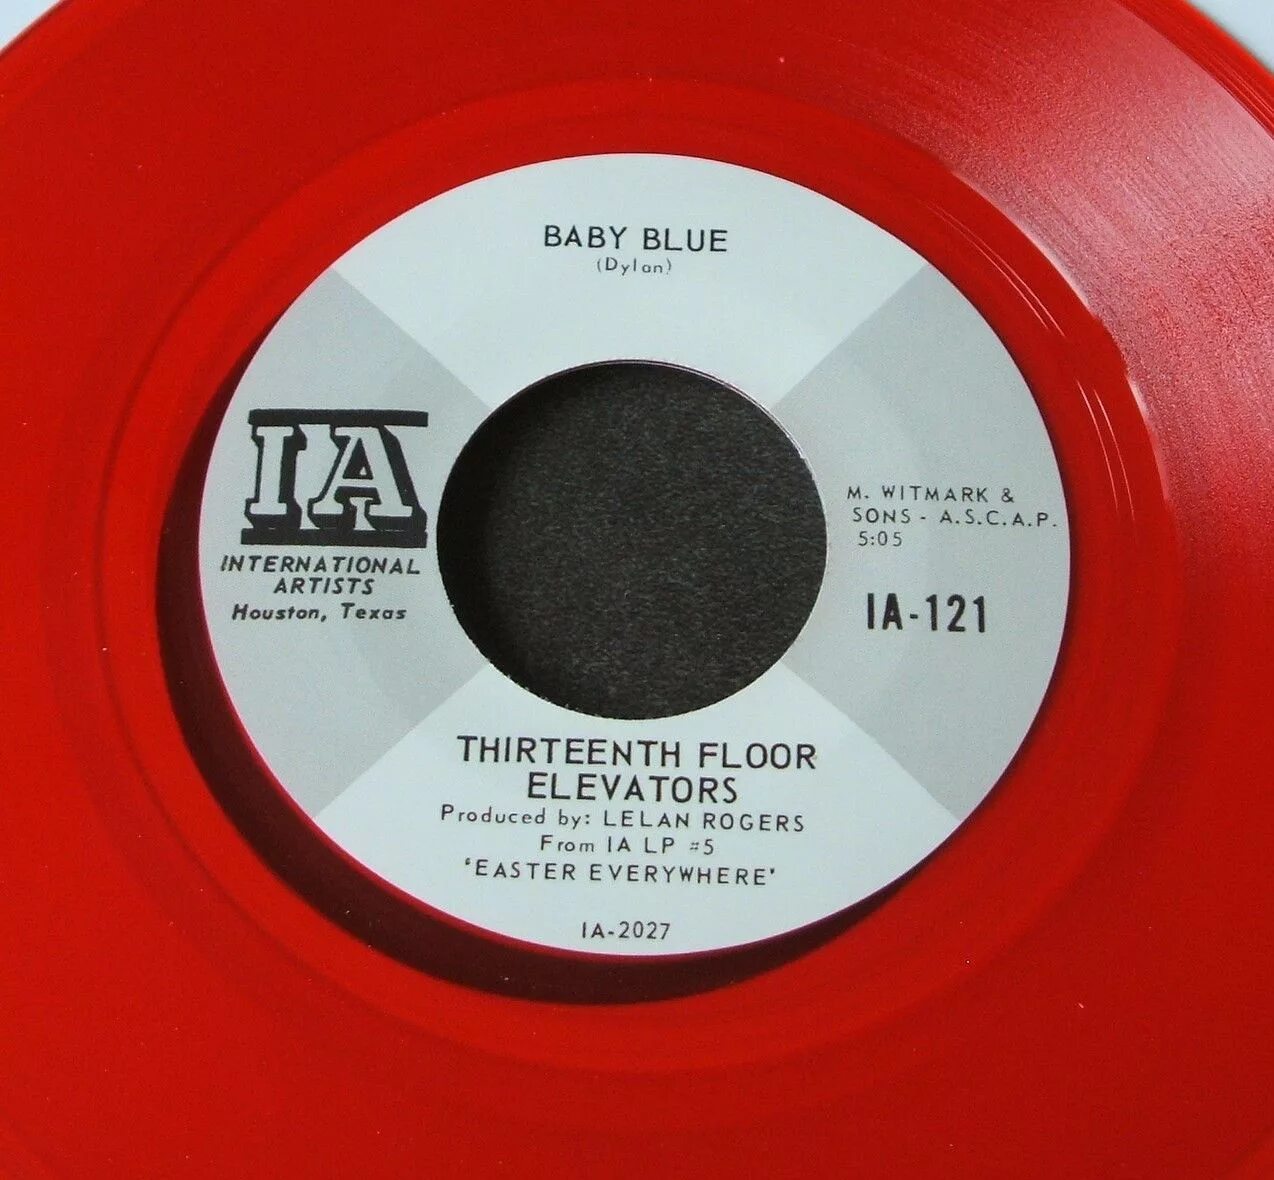 13th floor. Группа 13th Floor Elevators. Томми Холл 13th Floor Elevators. 13th Floor Elevators - 13 of the best. Cutie Red Vinyl.